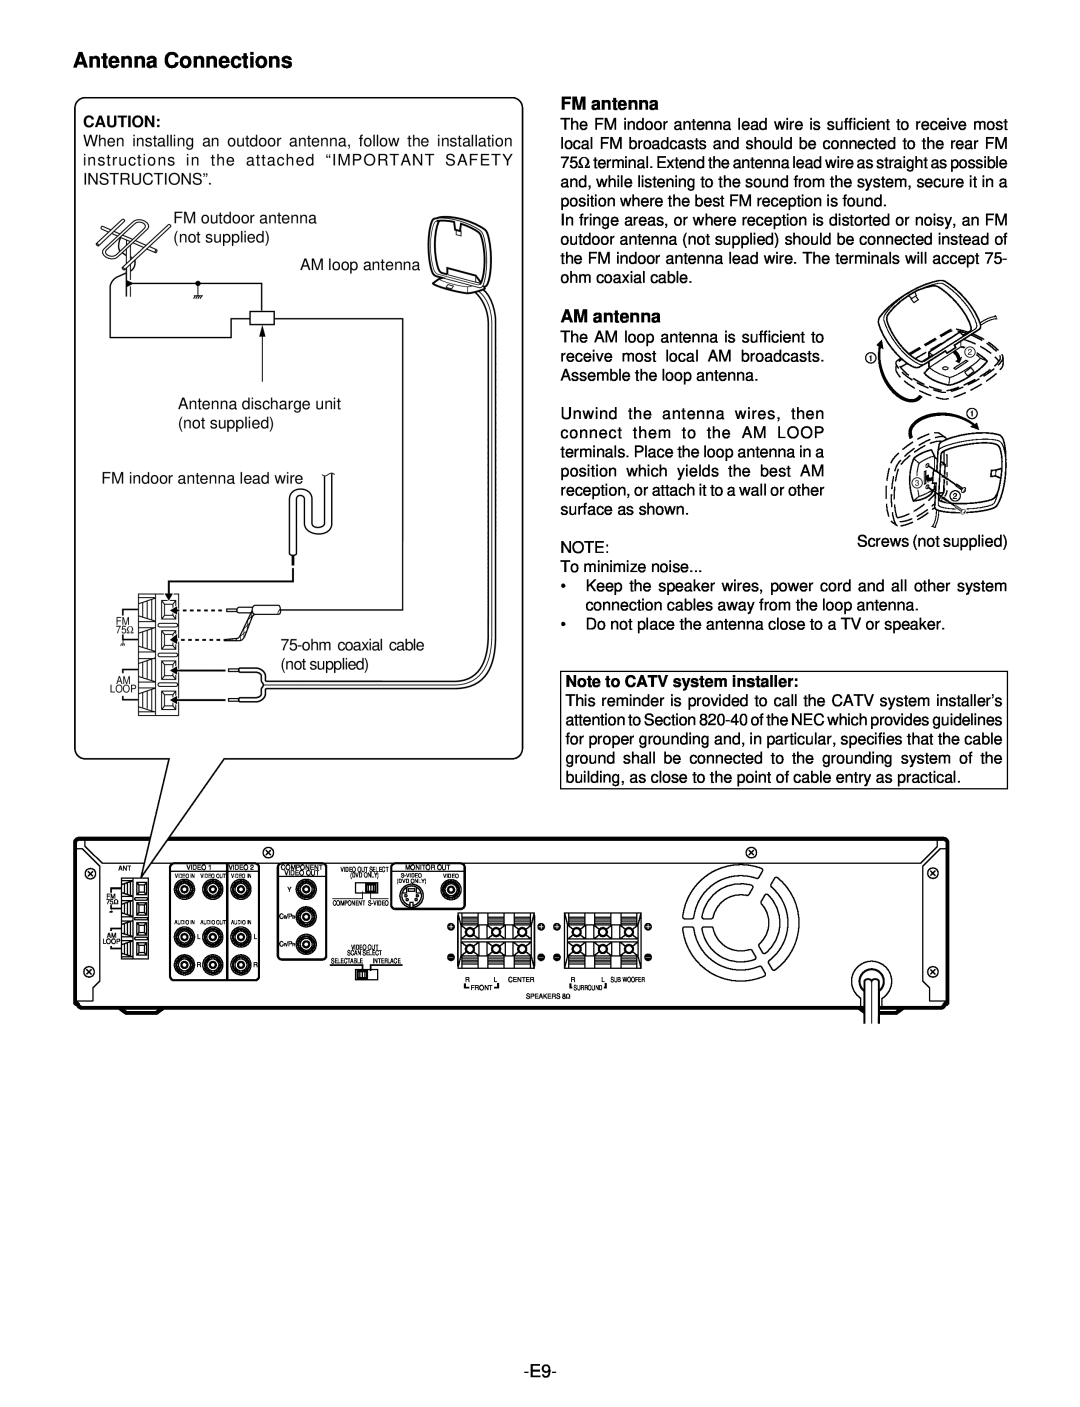 Hitachi DV-S522U instruction manual Antenna Connections, FM antenna, AM antenna, Note to CATV system installer 